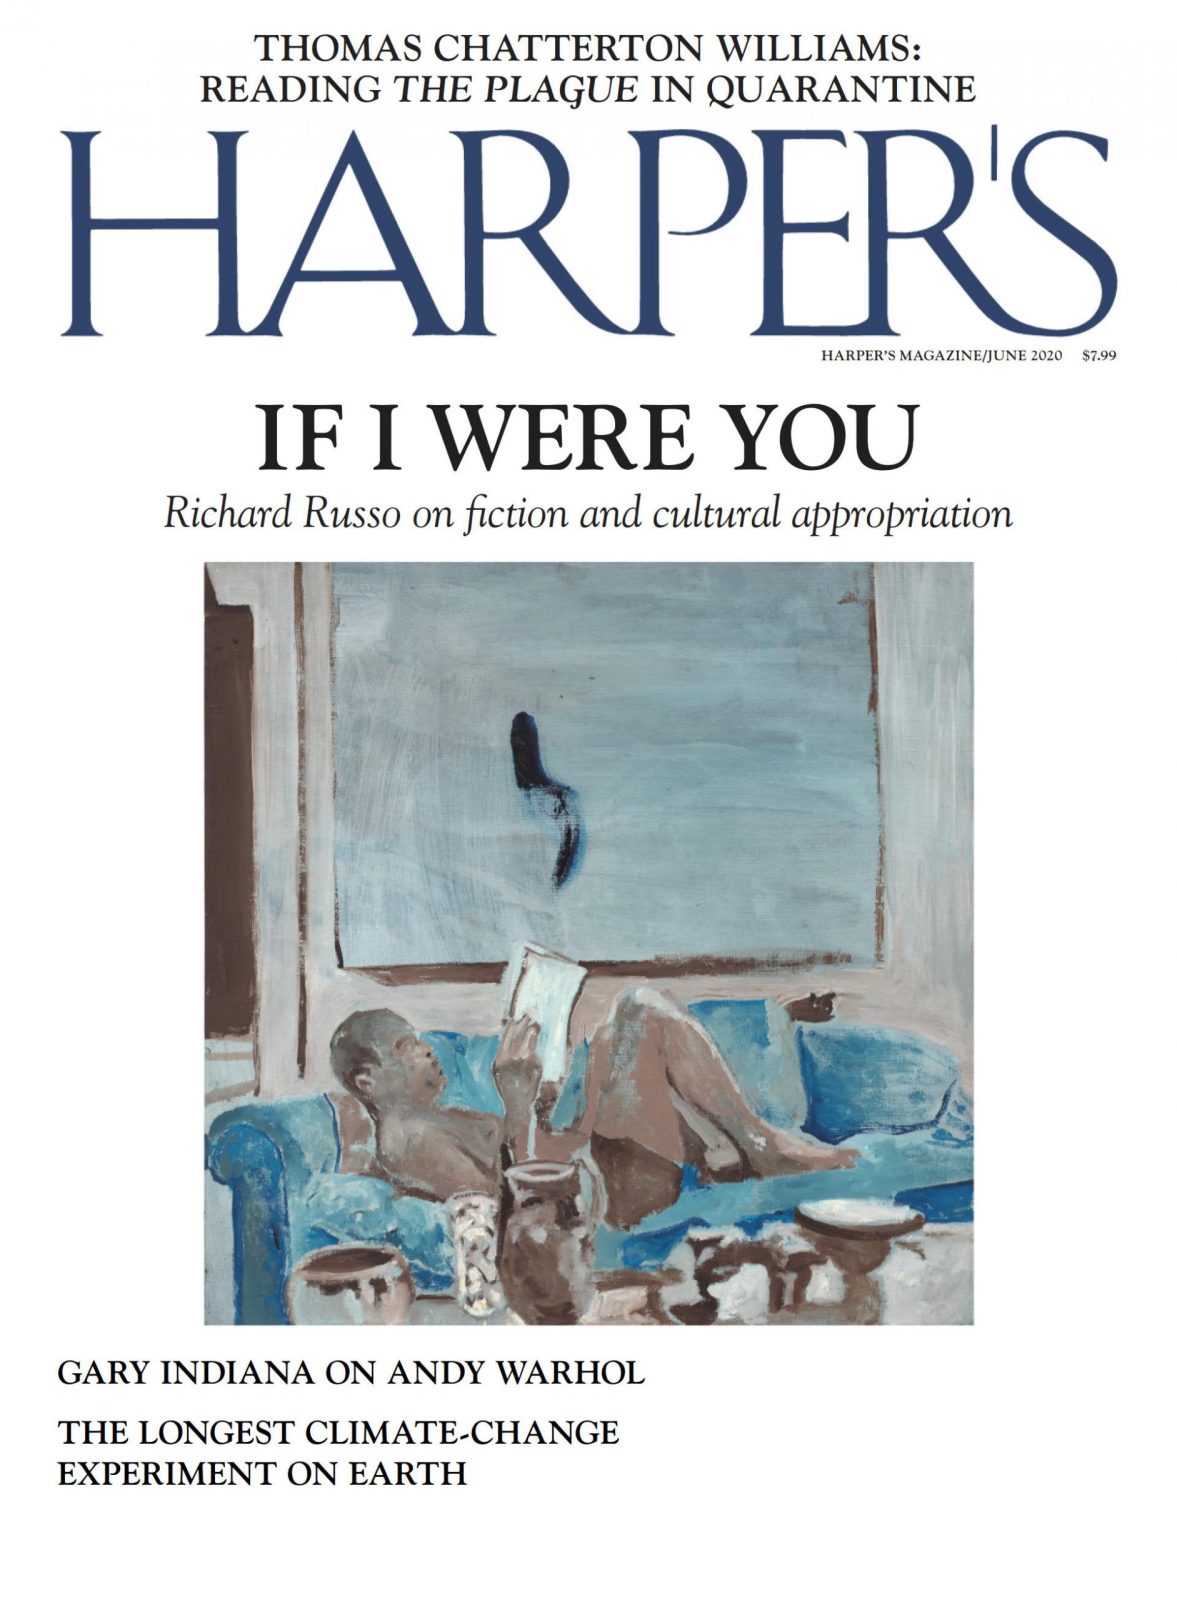 Harpers 哈珀斯杂志 JUNE 2020年6月刊